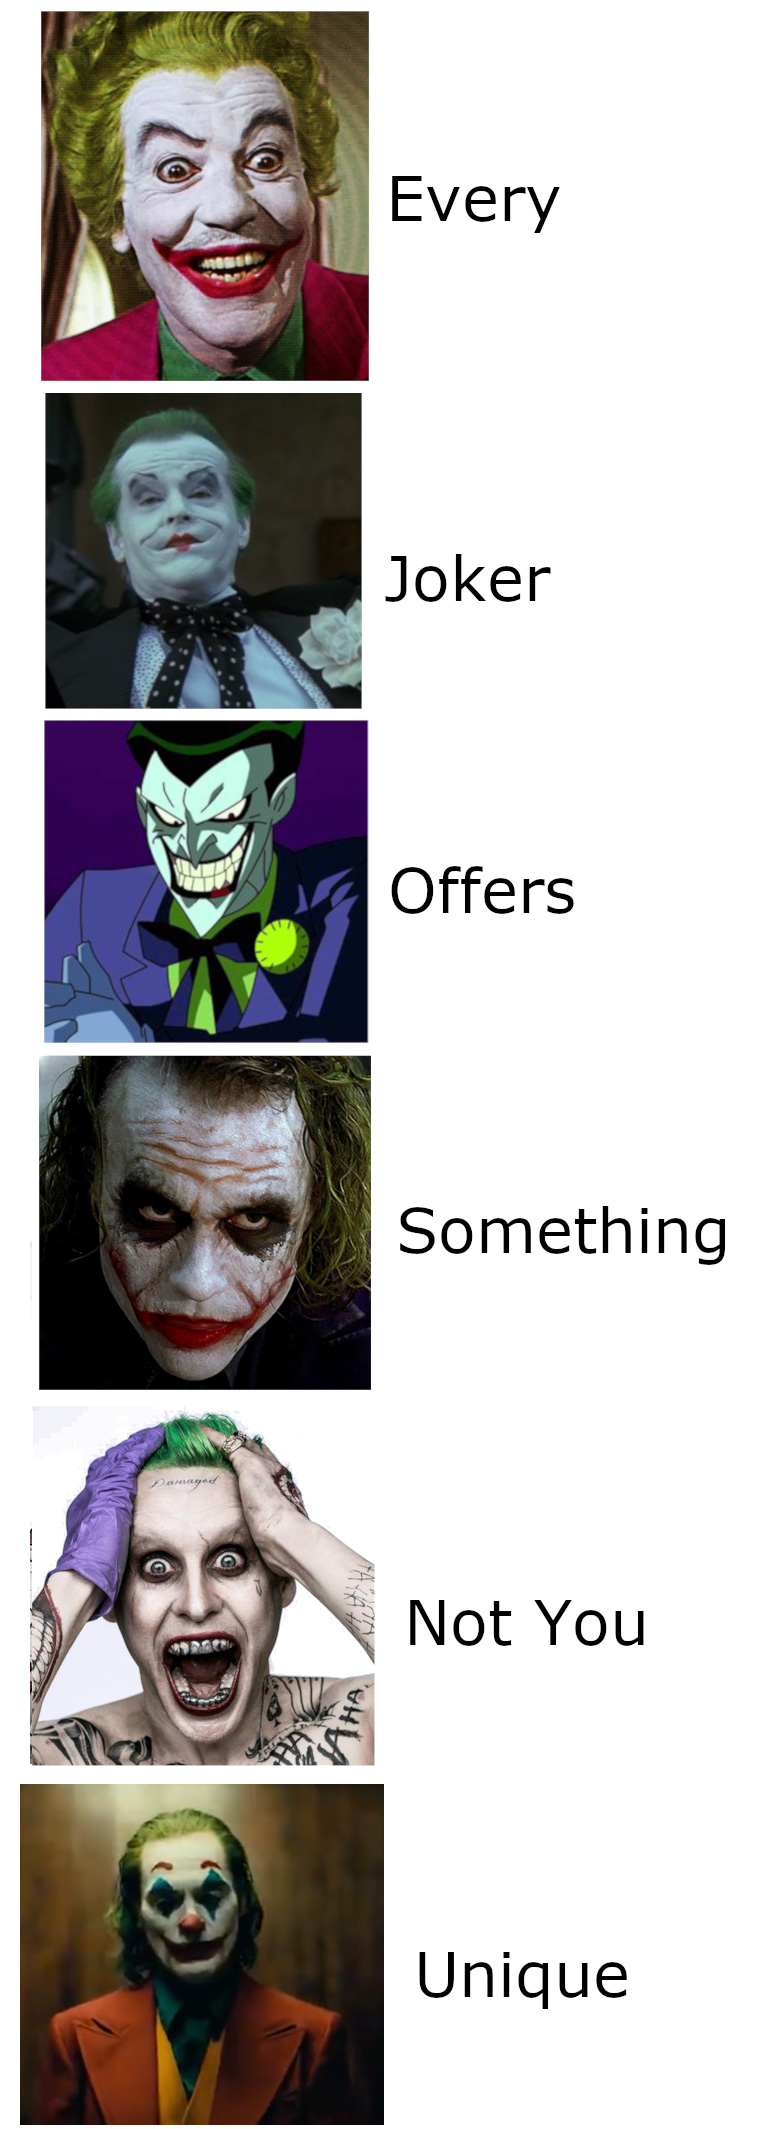 Every Joker